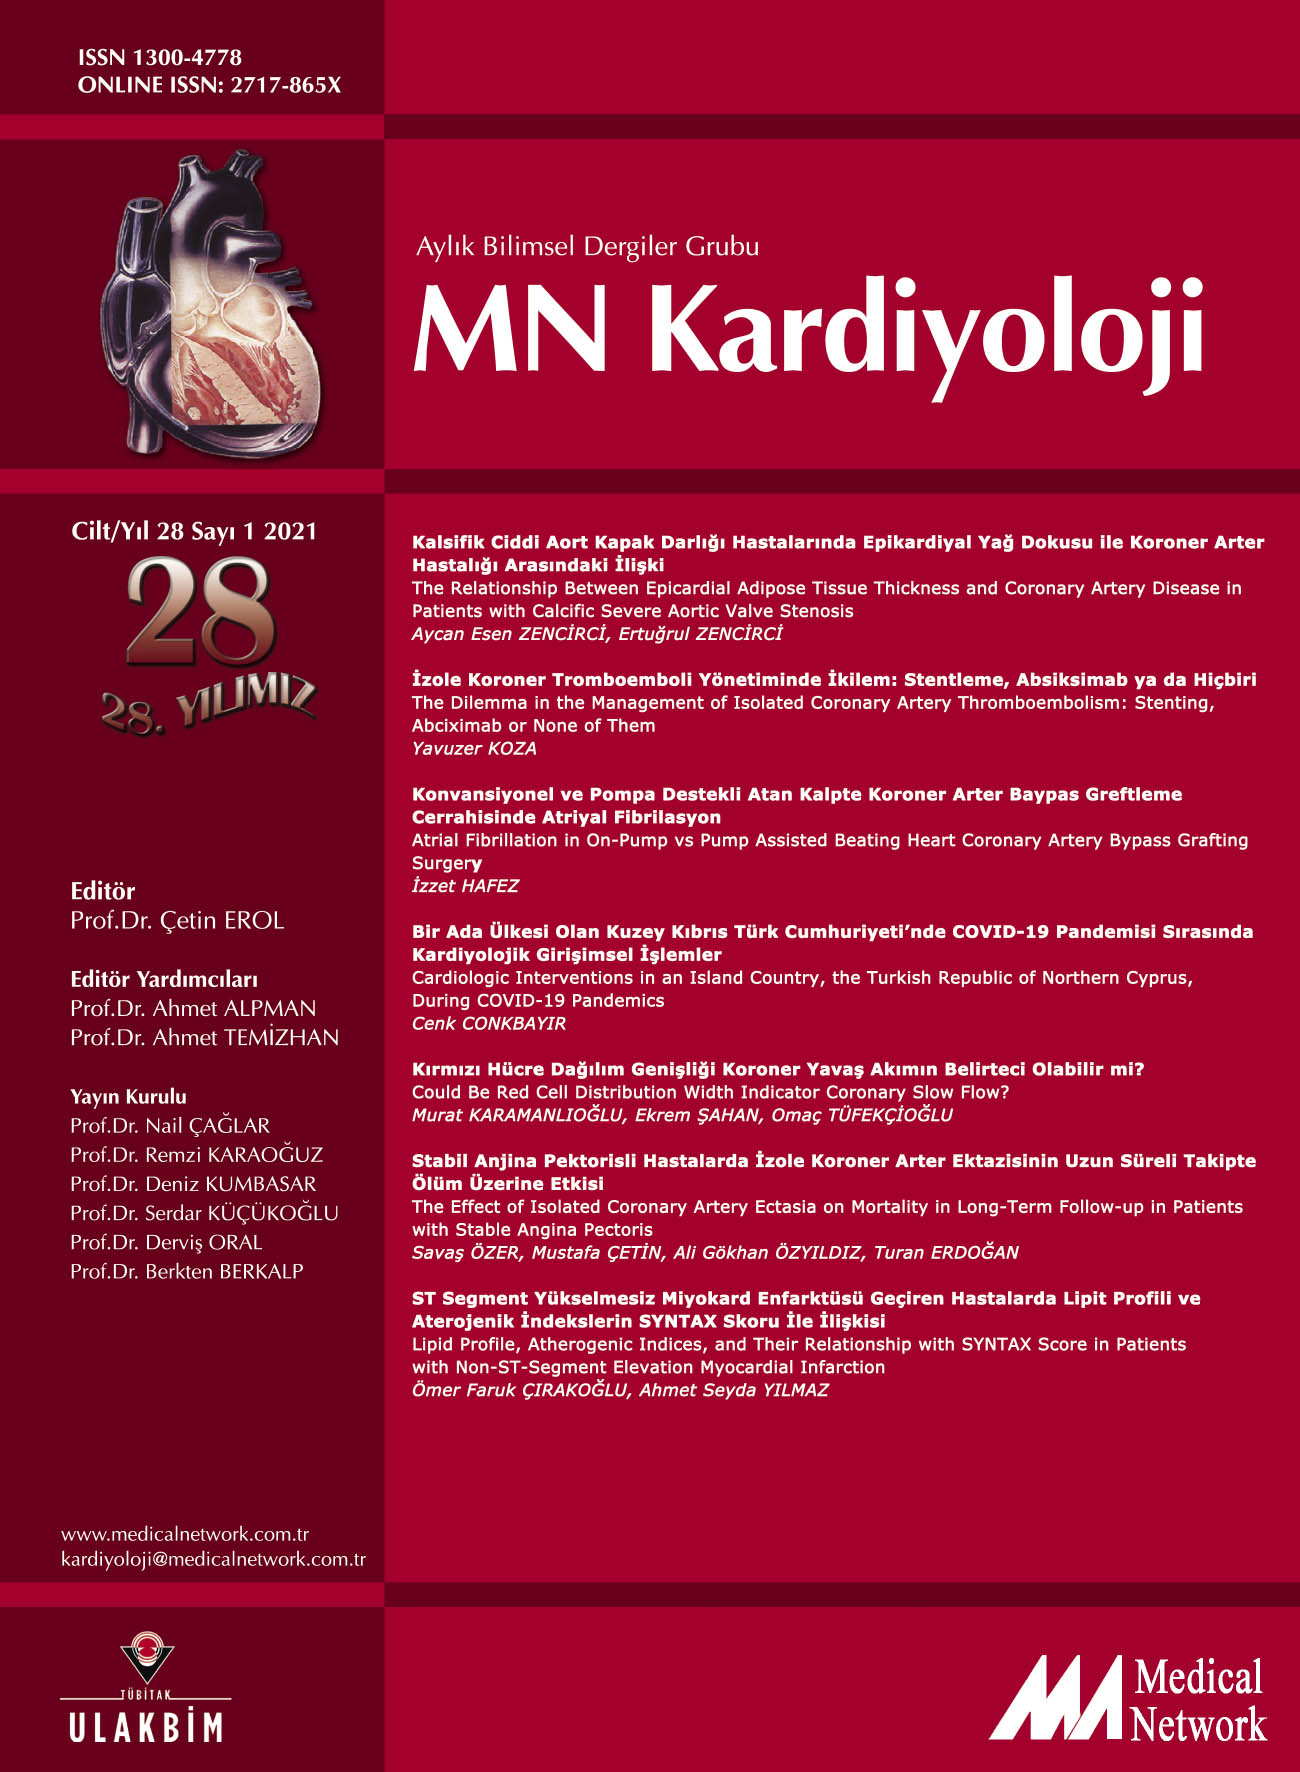 <p>MN Kardiyoloji Cilt: 28 Say: 1 2021 MN Cardiology Volume: 28 No: 1 2021</p>